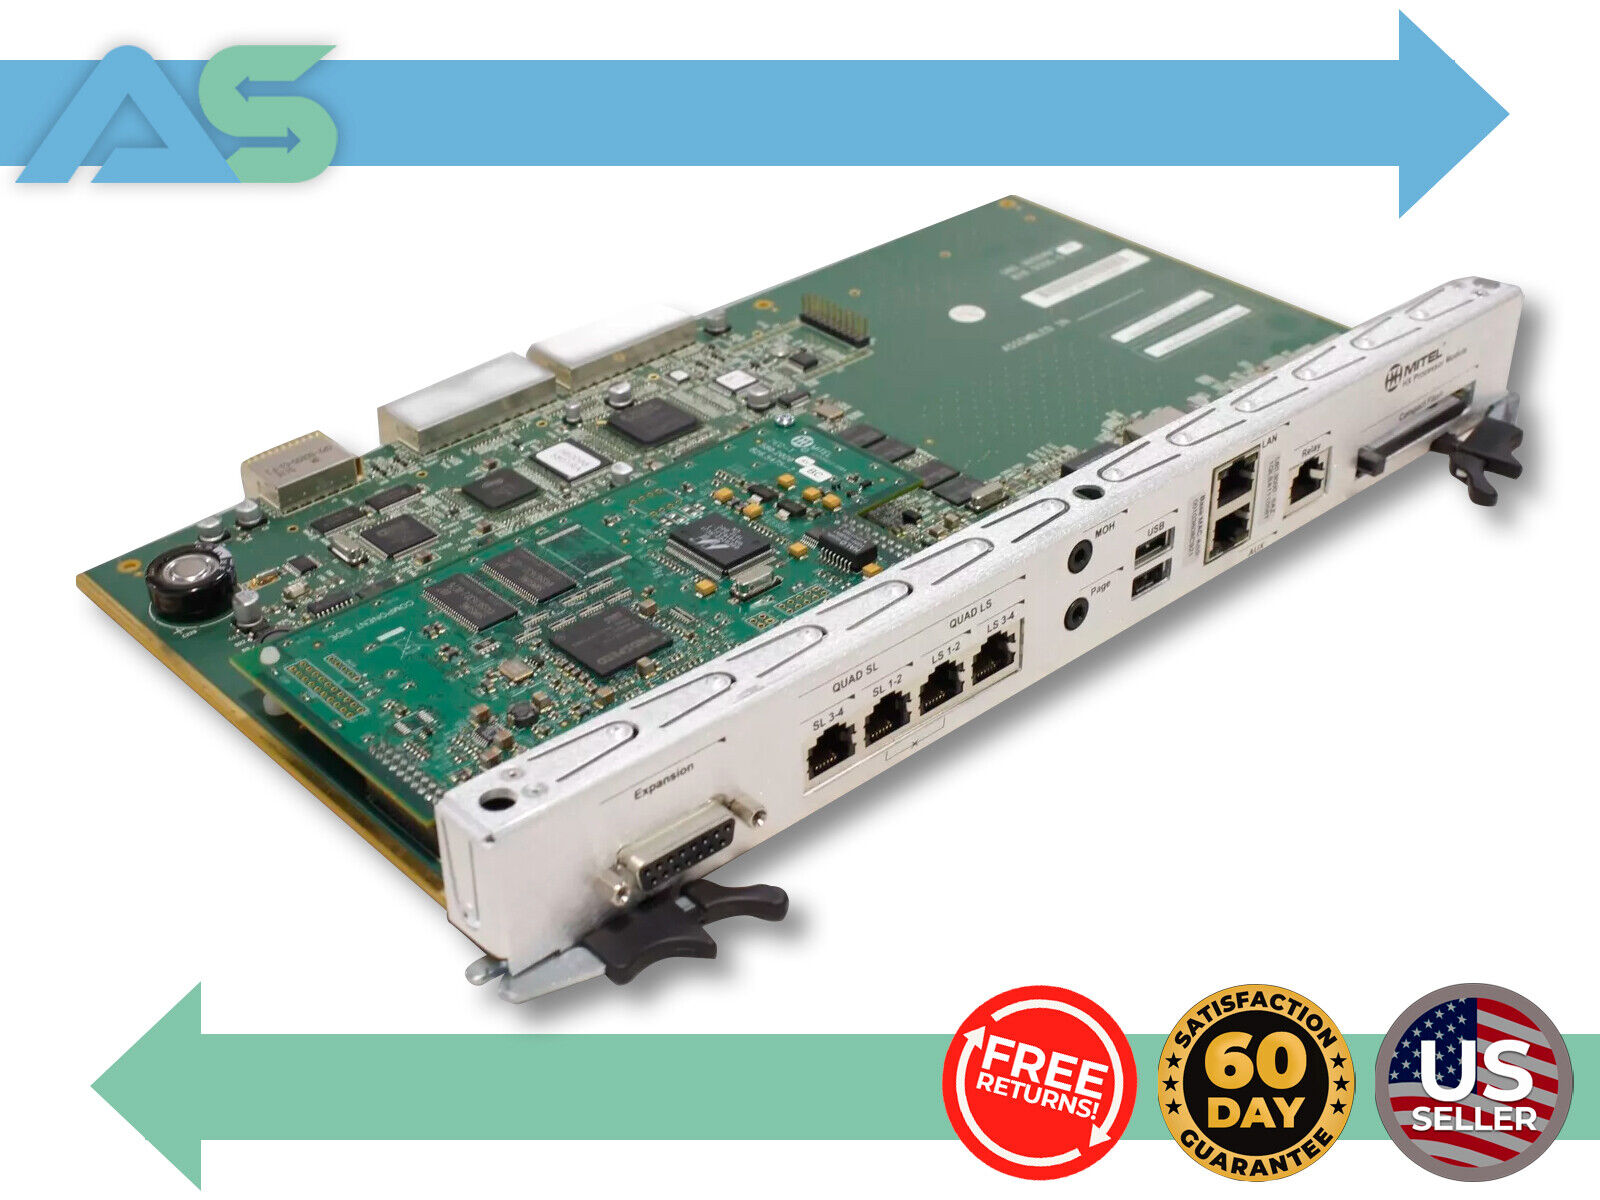 Mitel 5000 HX Controller Processor Module 580.3000 w/ 2GB Compact Flash Card